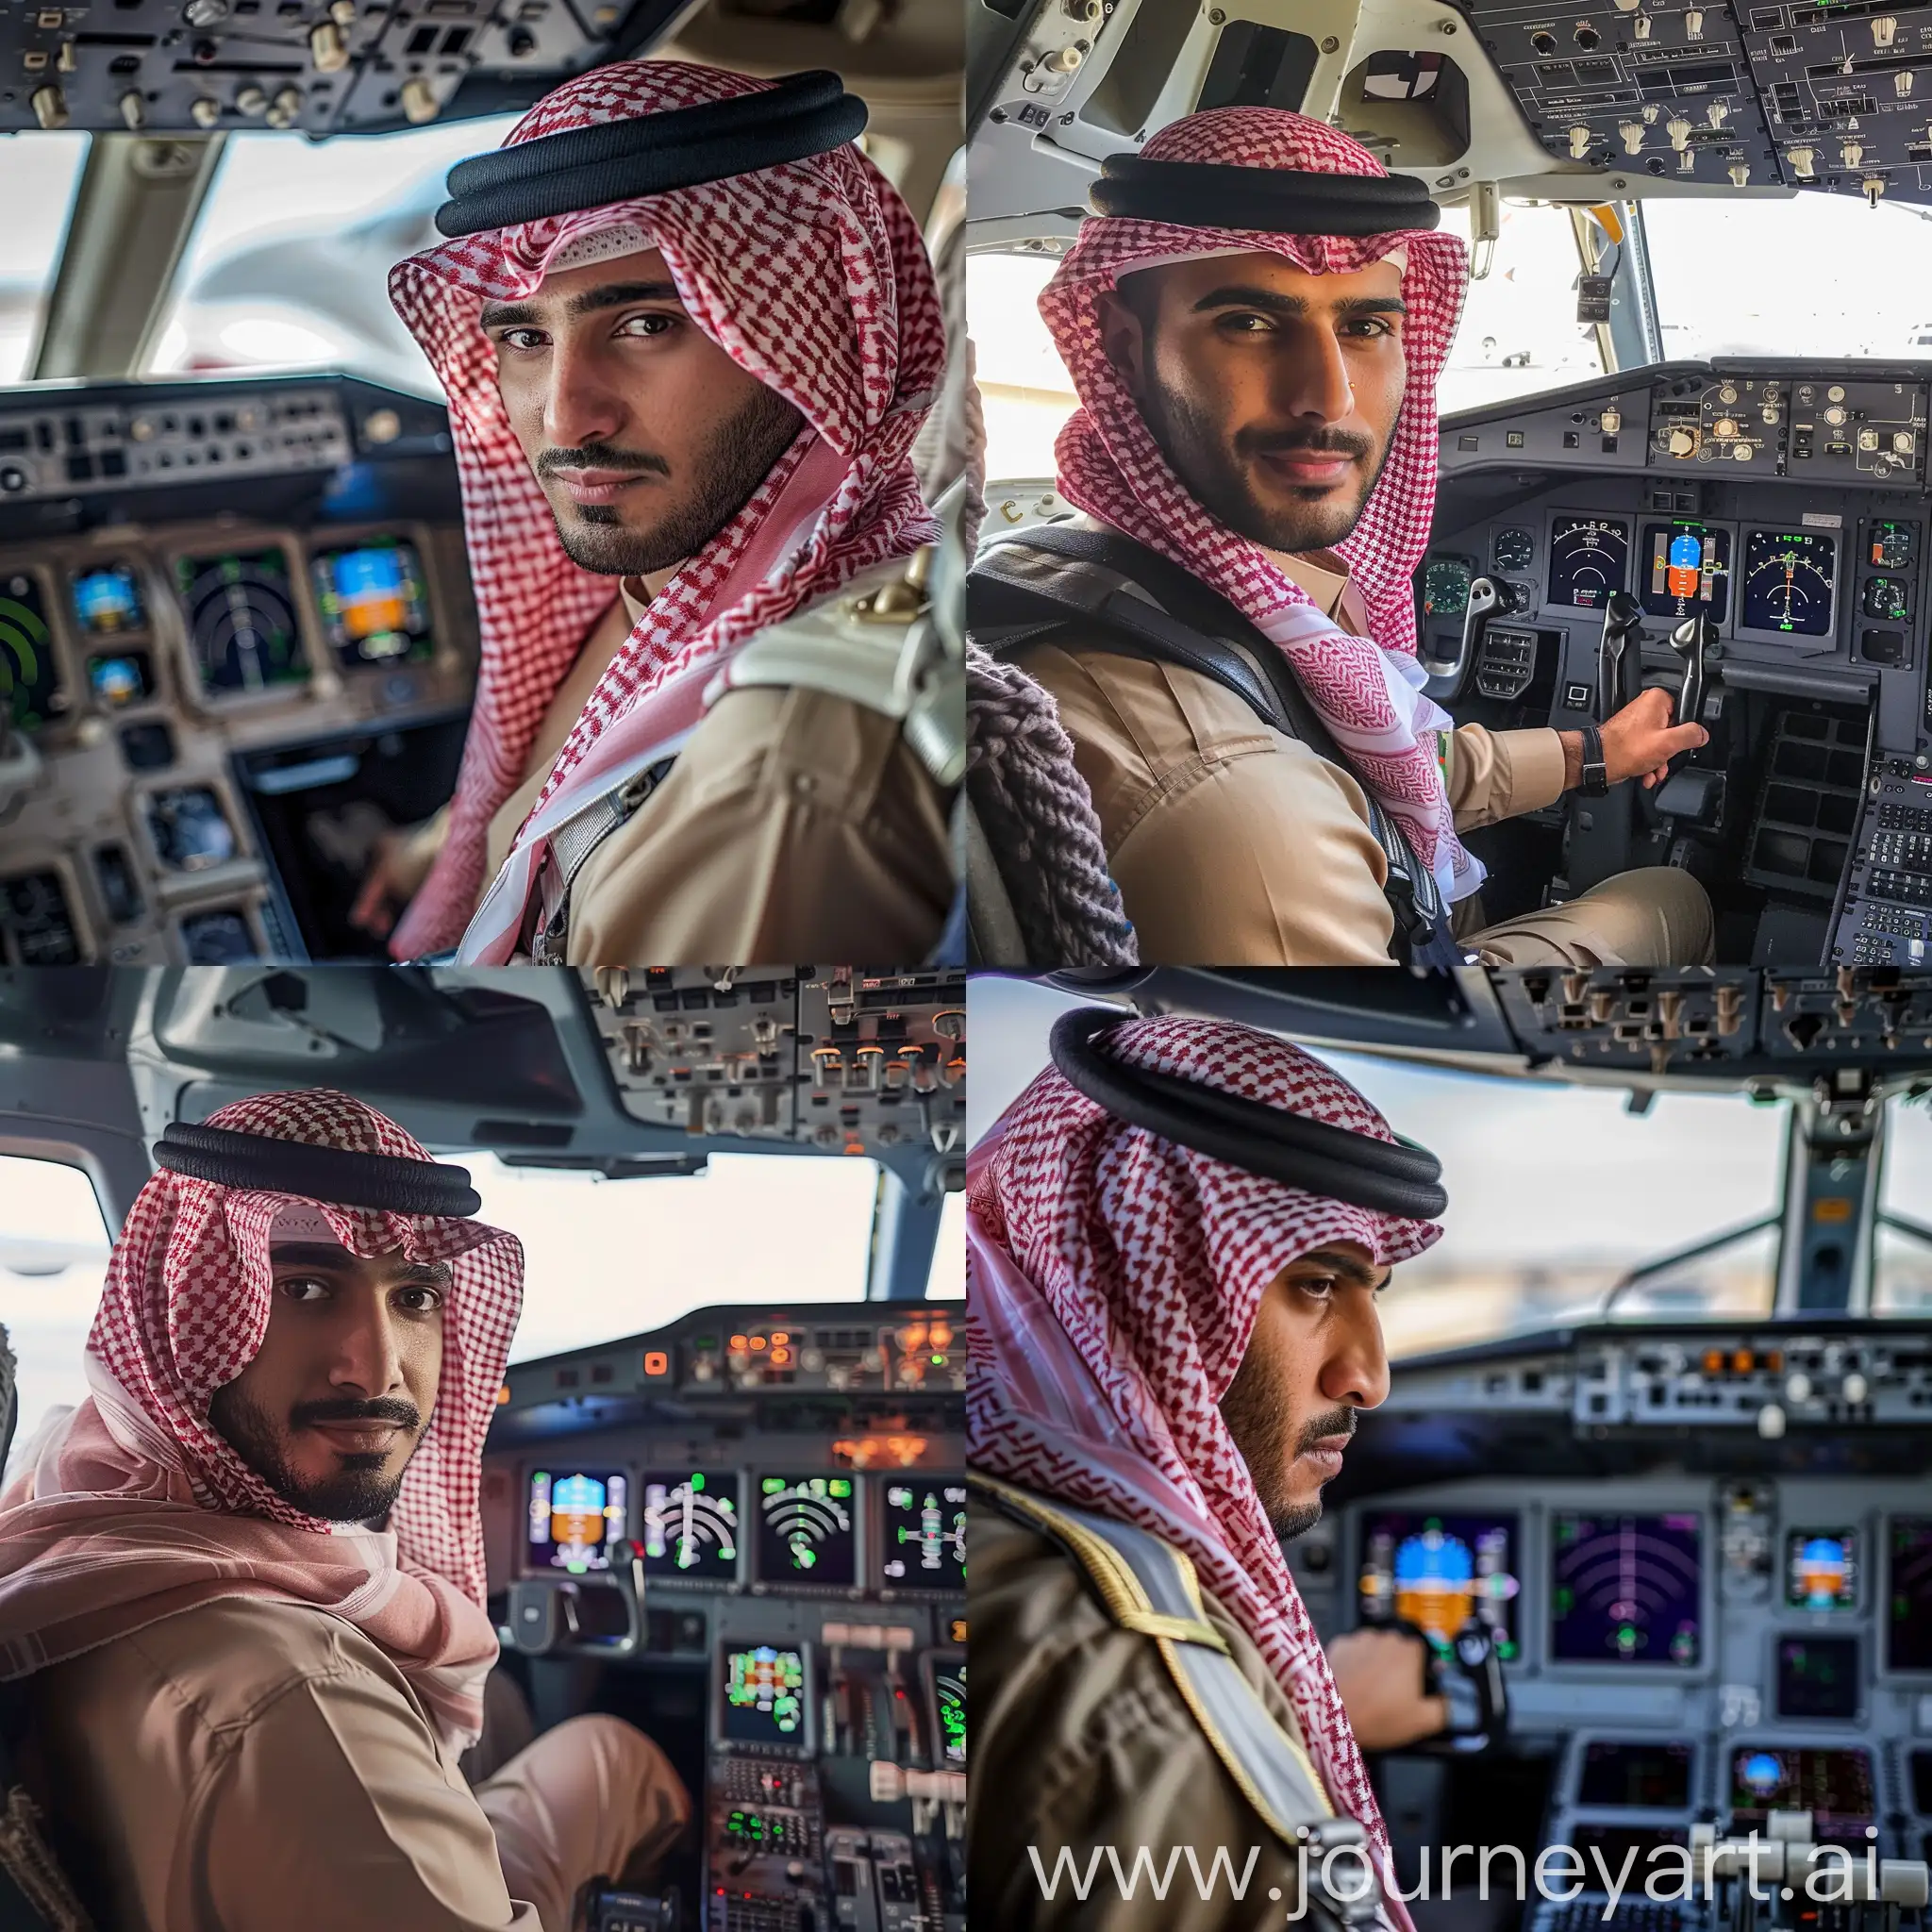 arabian man with Keffiyeh in cockpit of airplane